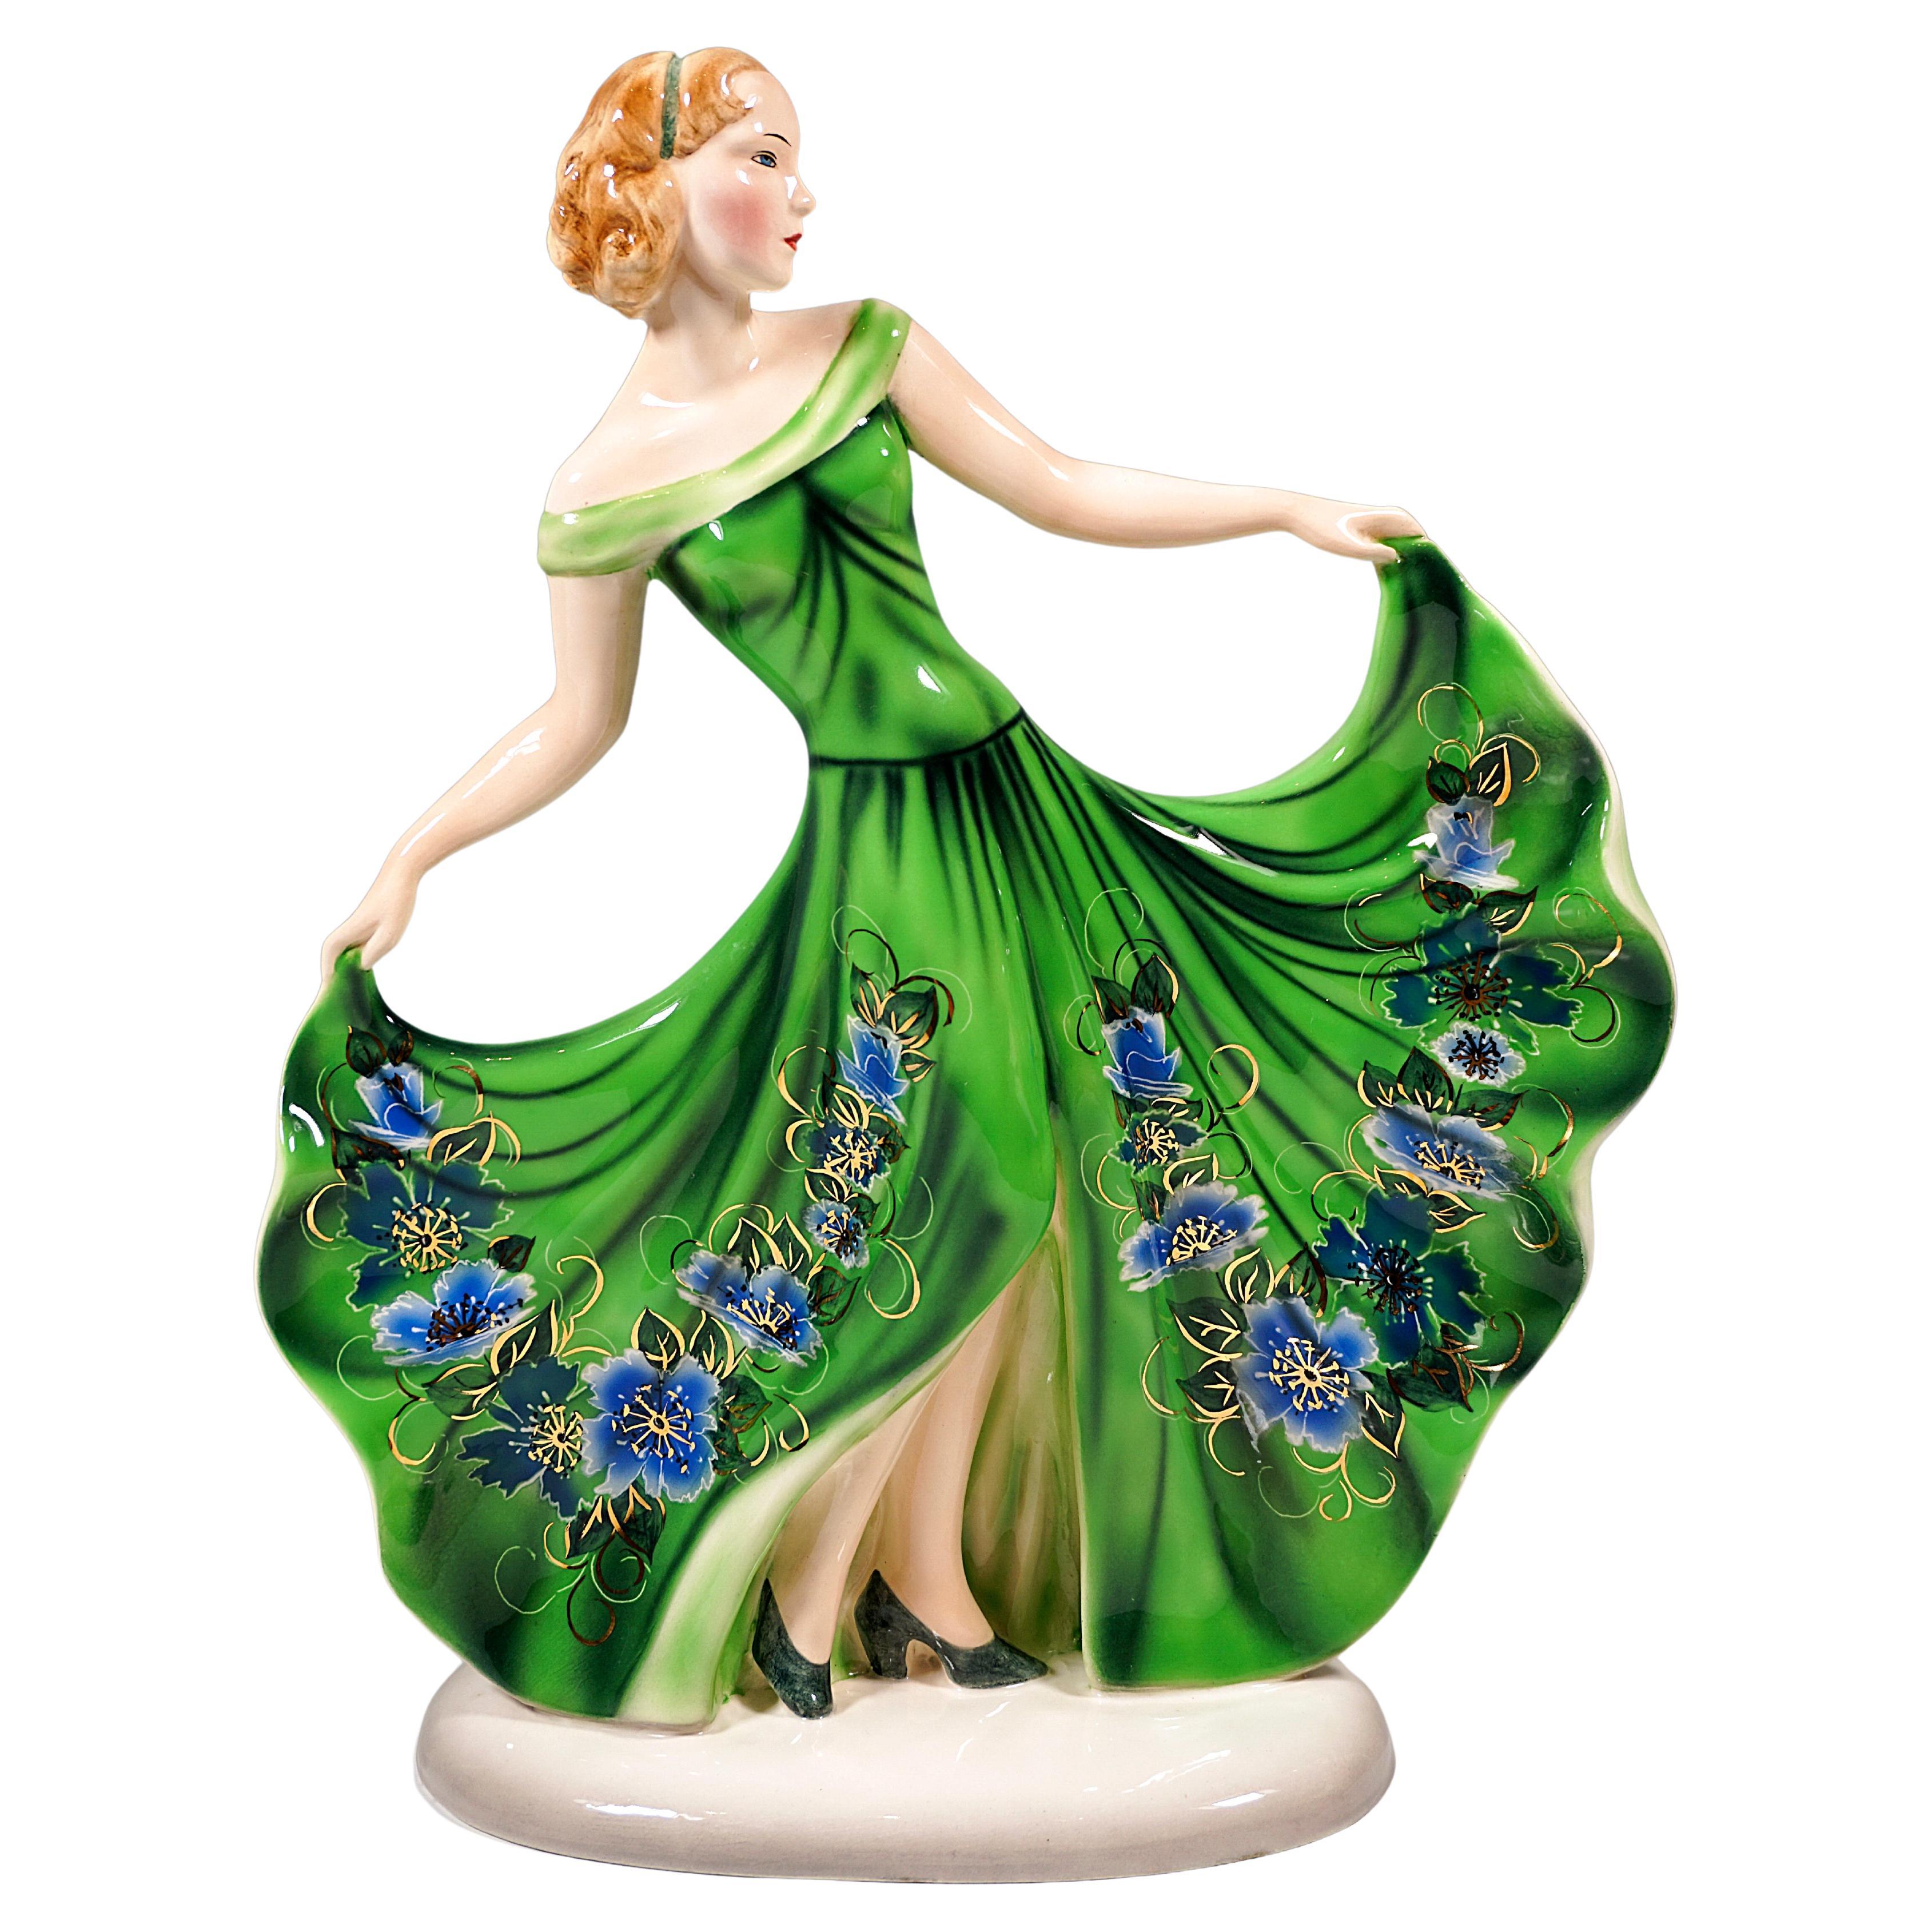 Goldscheider Art Déco Figure, 'Lydia' Dancer in Green Dress, Claire Weiss, c1937 For Sale